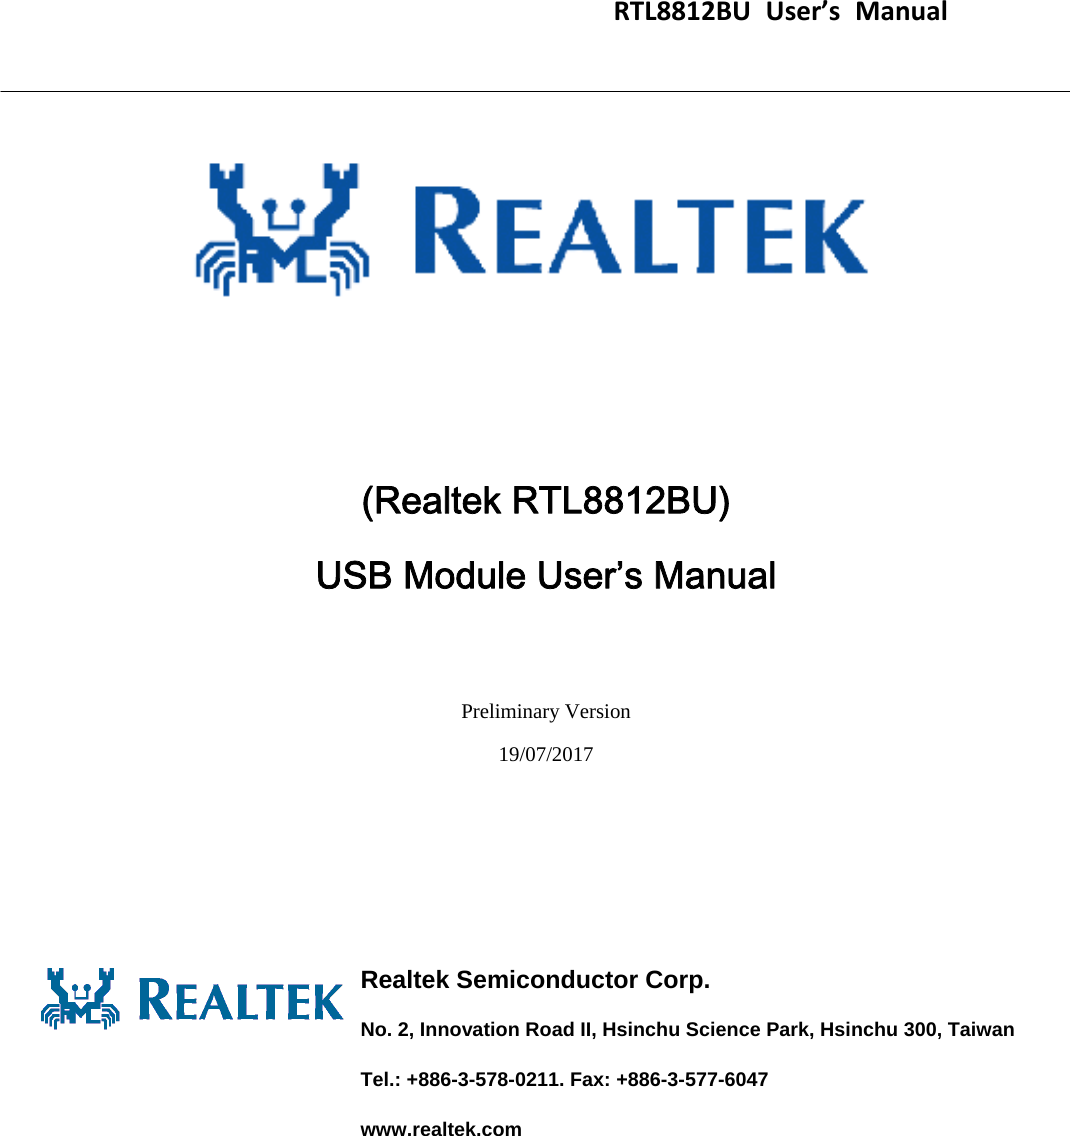                                    RTL8812BUUser’sManual                                       (Realtek RTL8812BU)   USB Module User’s Manual  Preliminary Version 19/07/2017     Realtek Semiconductor Corp. No. 2, Innovation Road II, Hsinchu Science Park, Hsinchu 300, Taiwan Tel.: +886-3-578-0211. Fax: +886-3-577-6047 www.realtek.com  